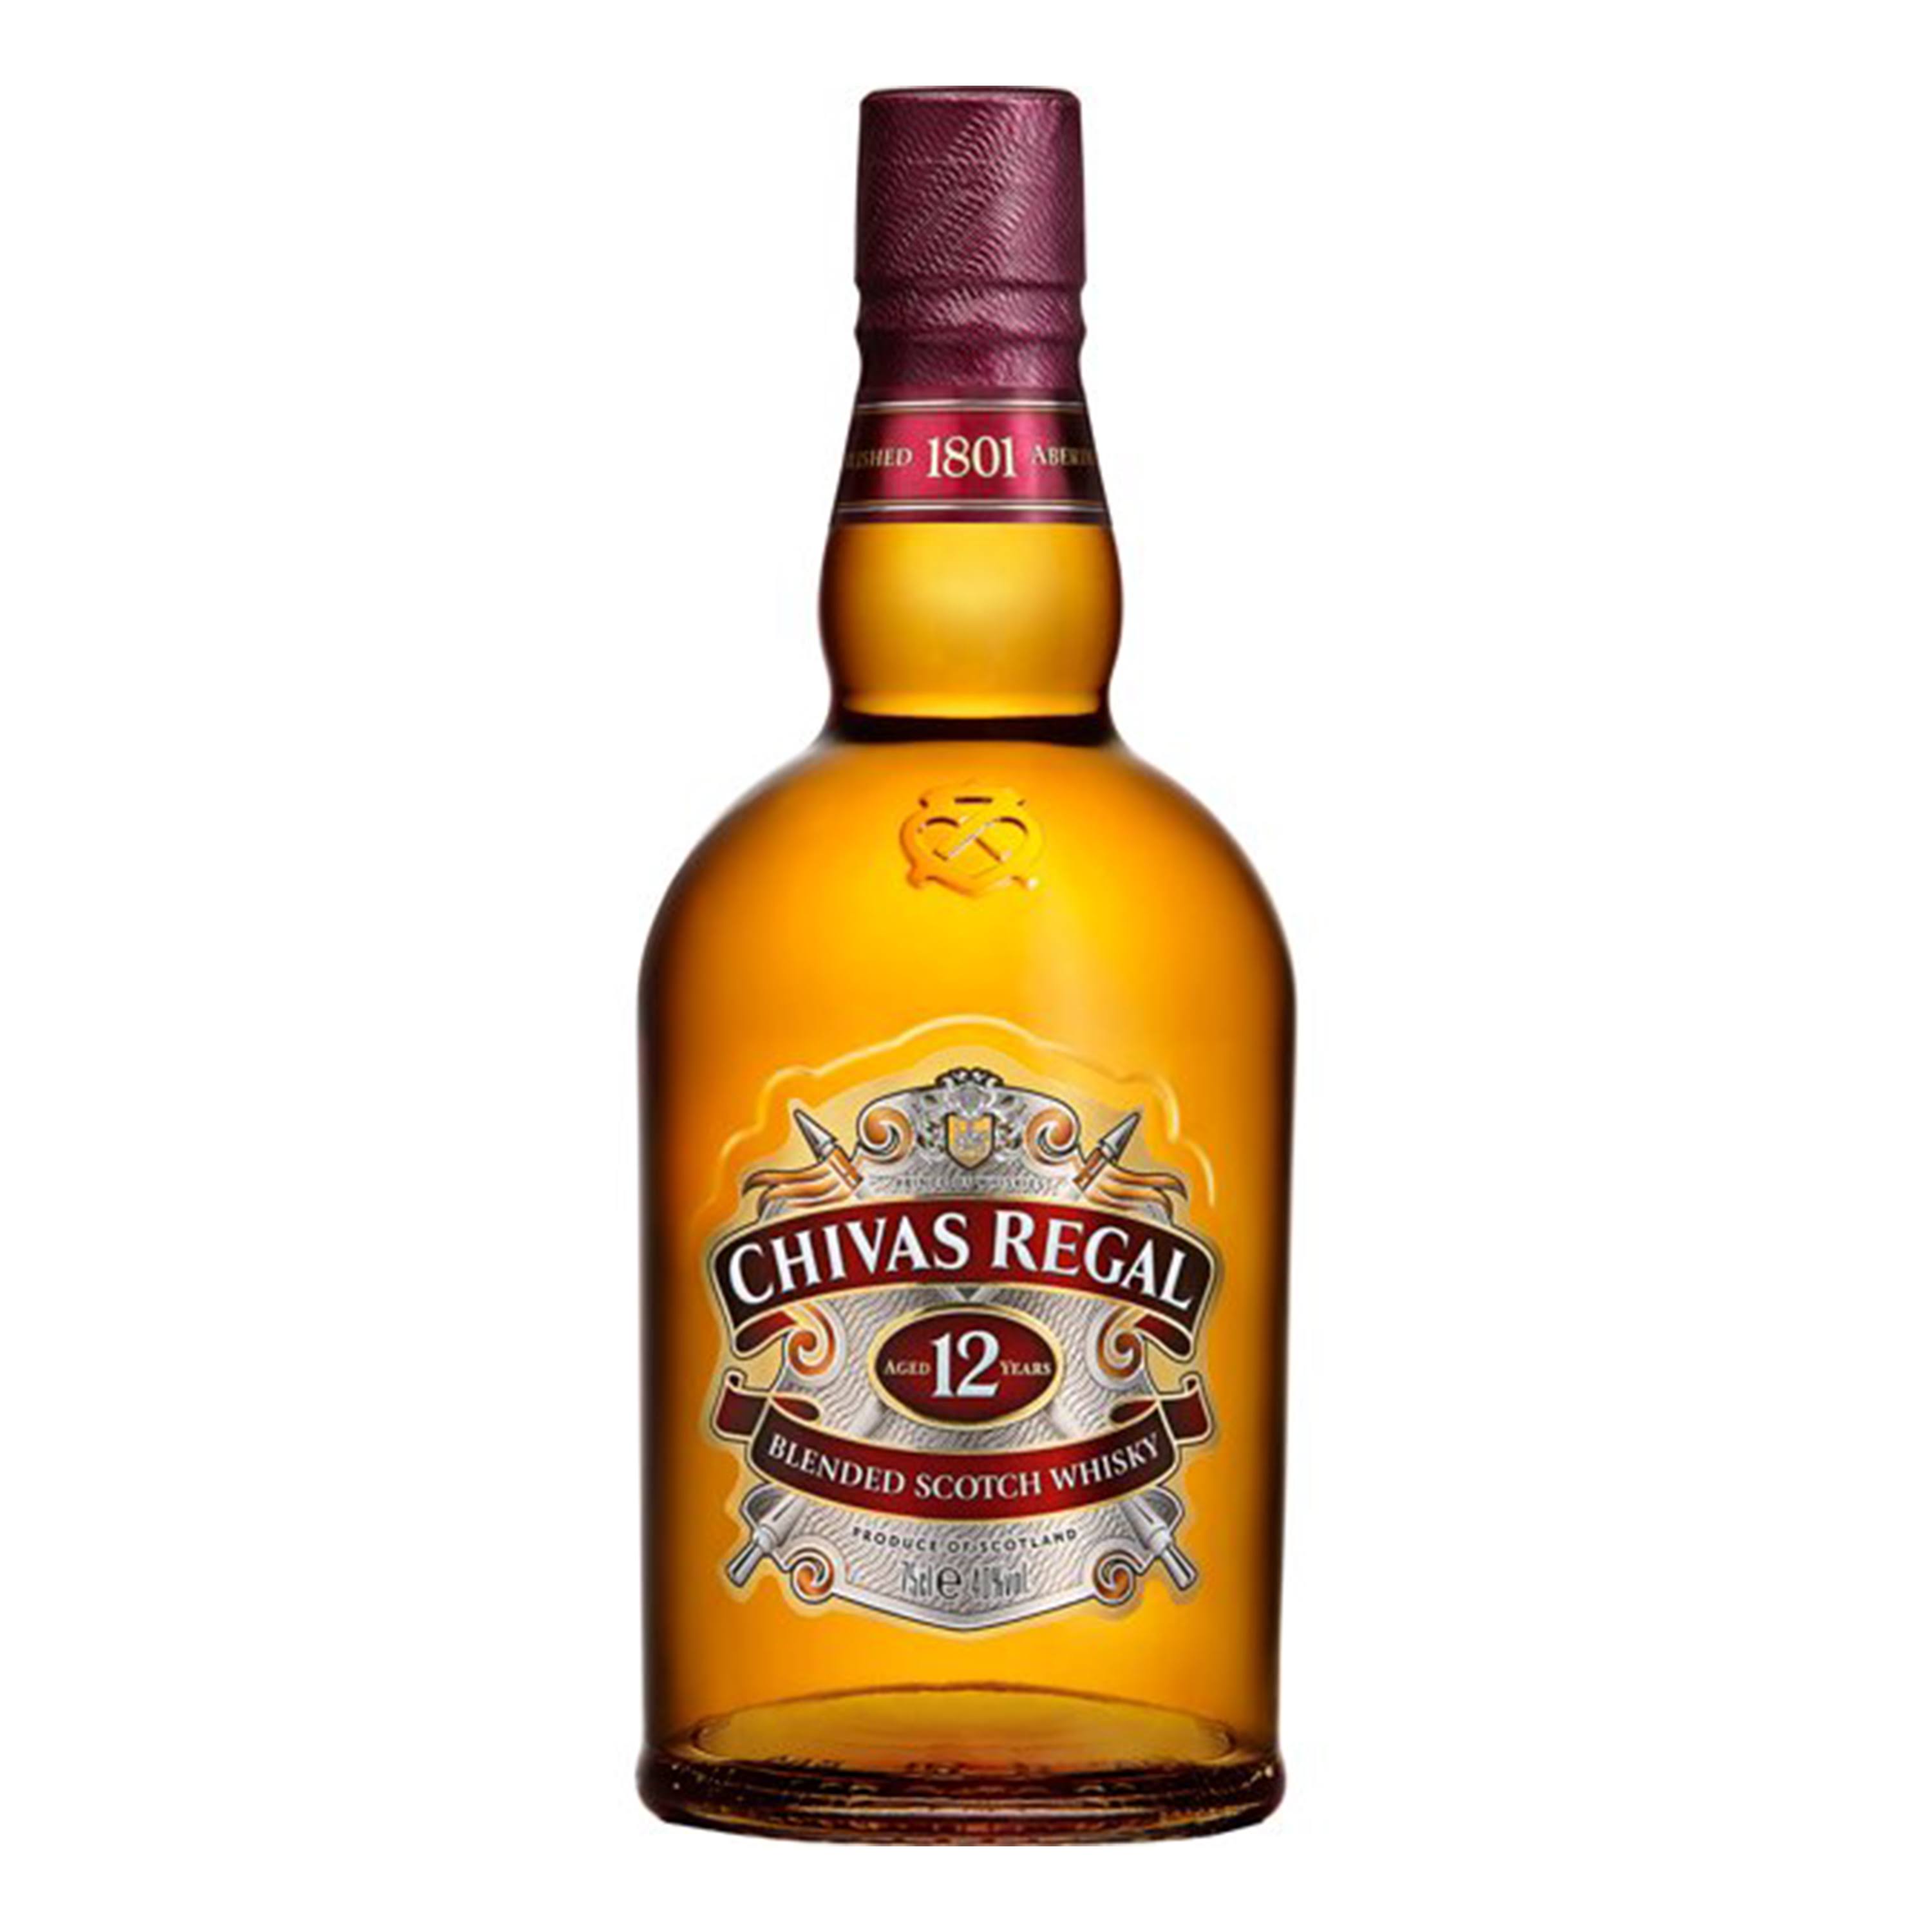 Chivas Regal Premium Scotch Whisky